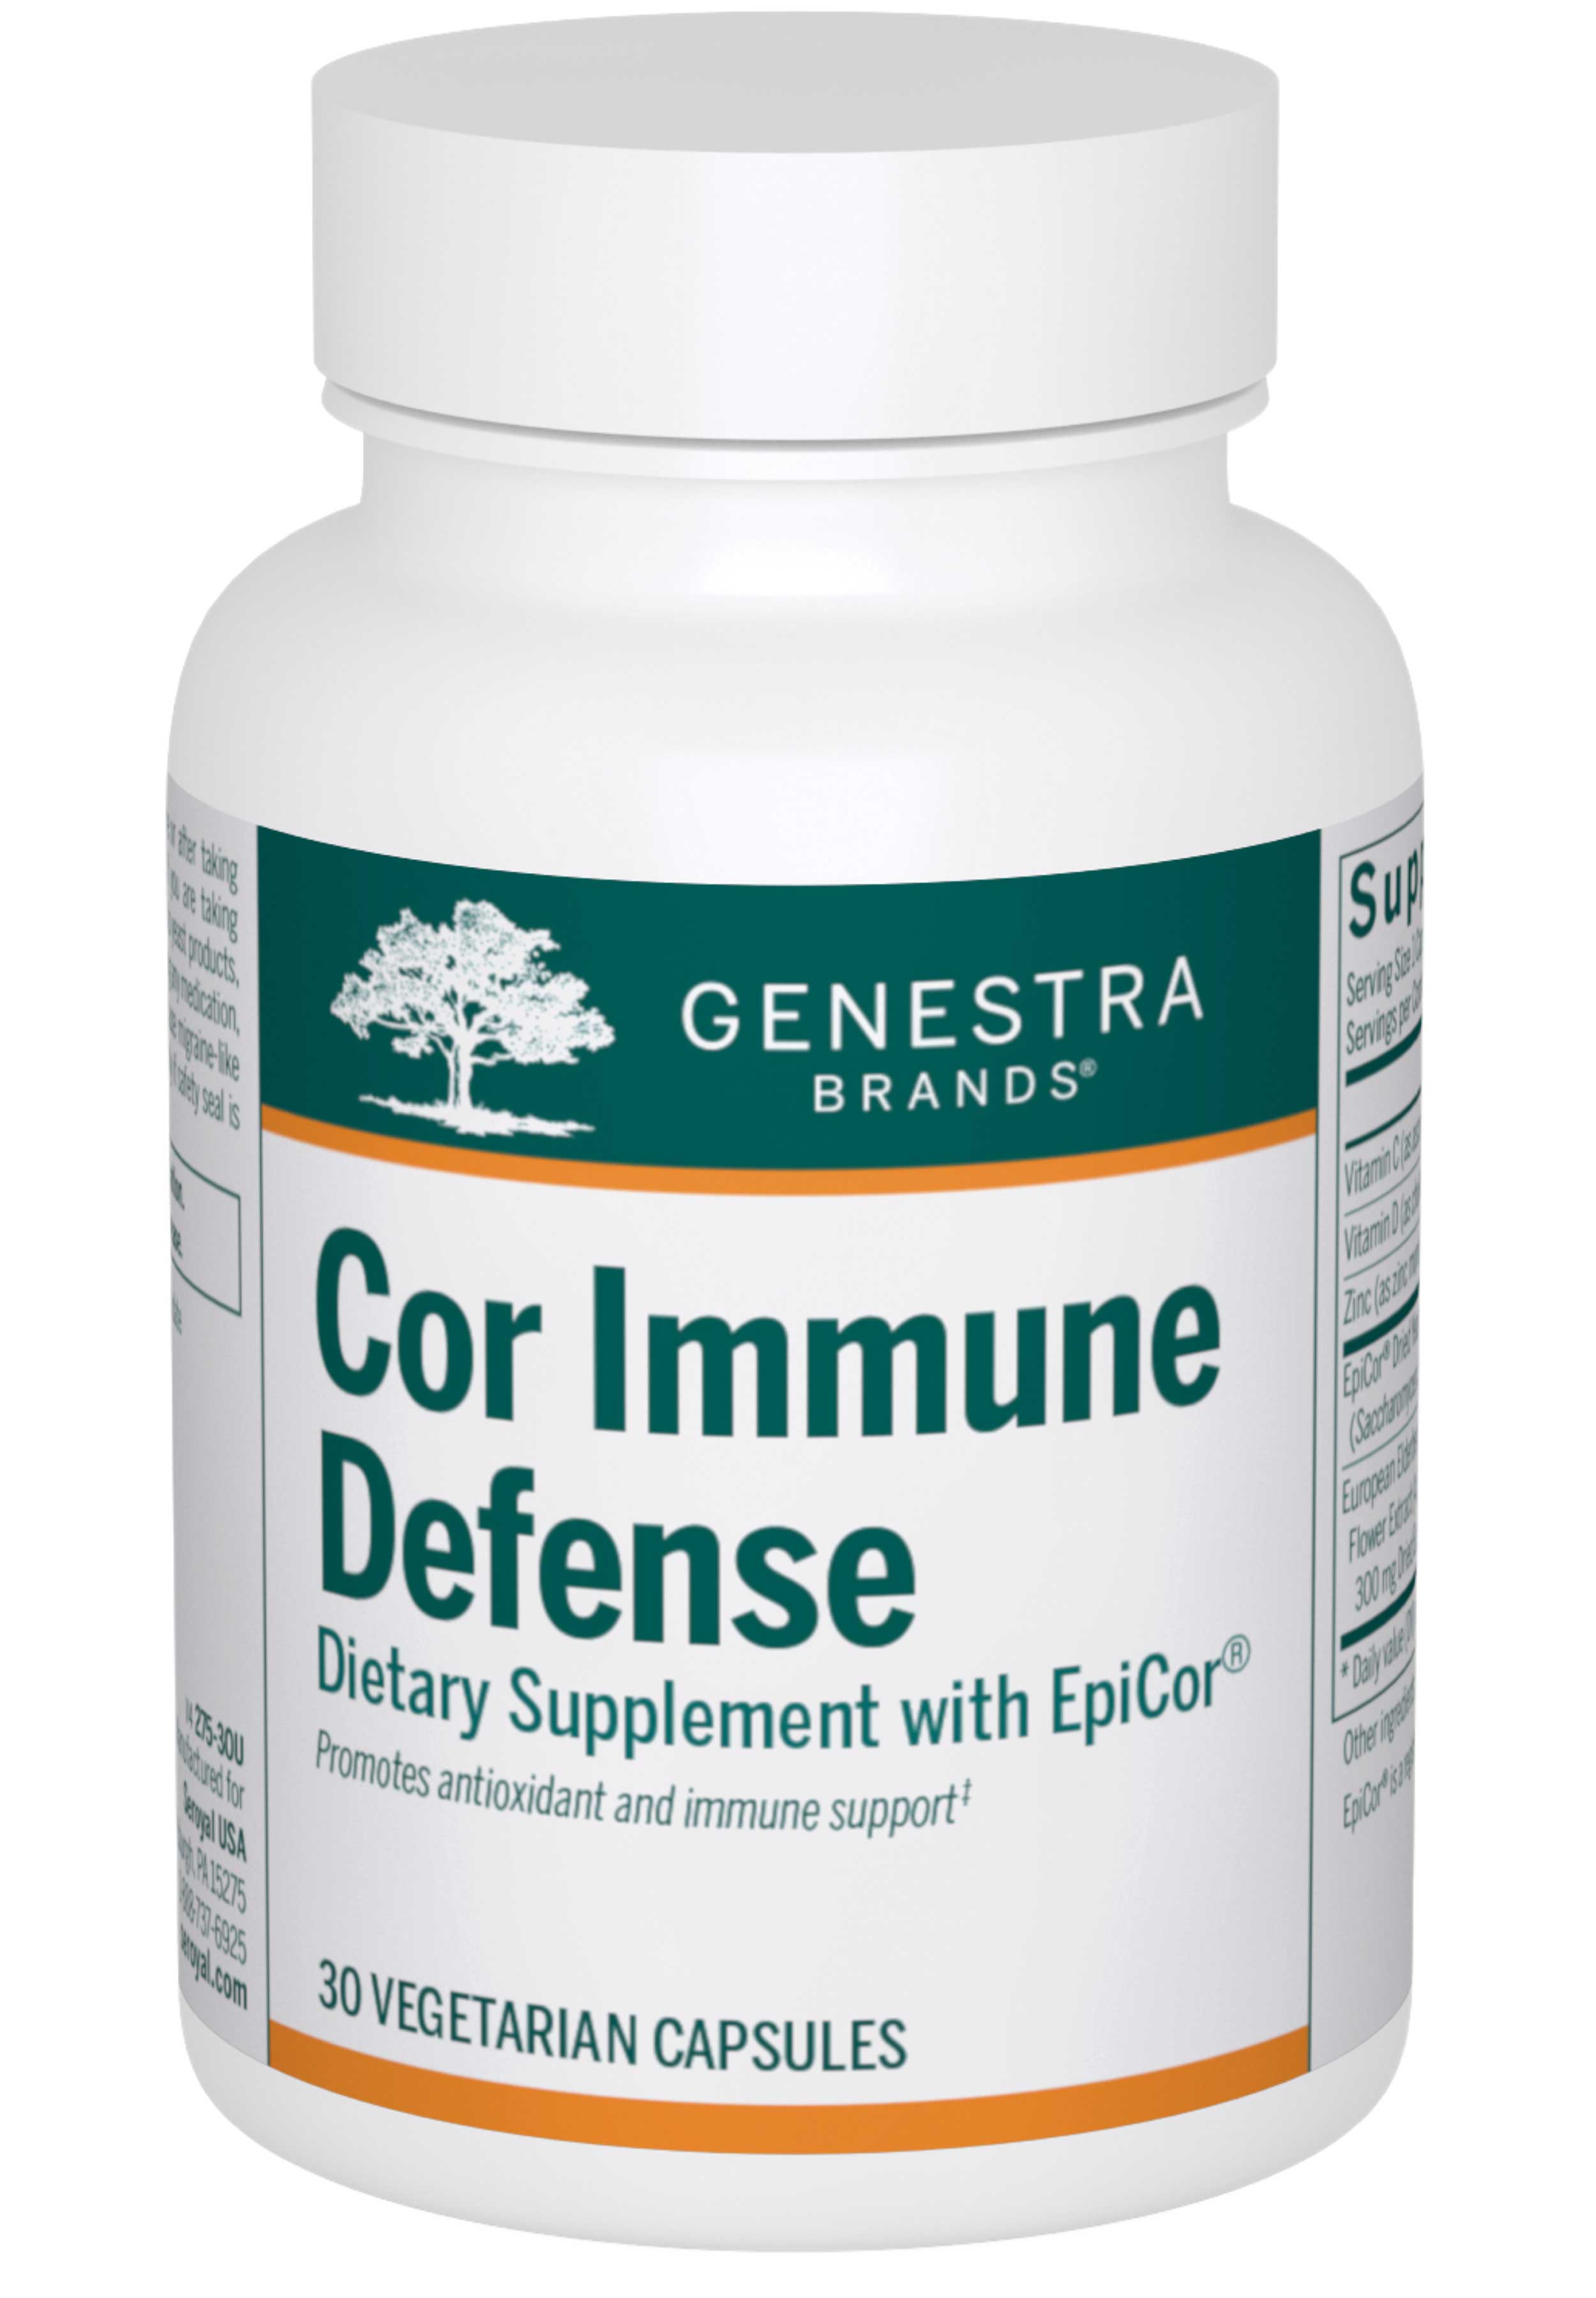 Genestra Brands Cor Immune Defense